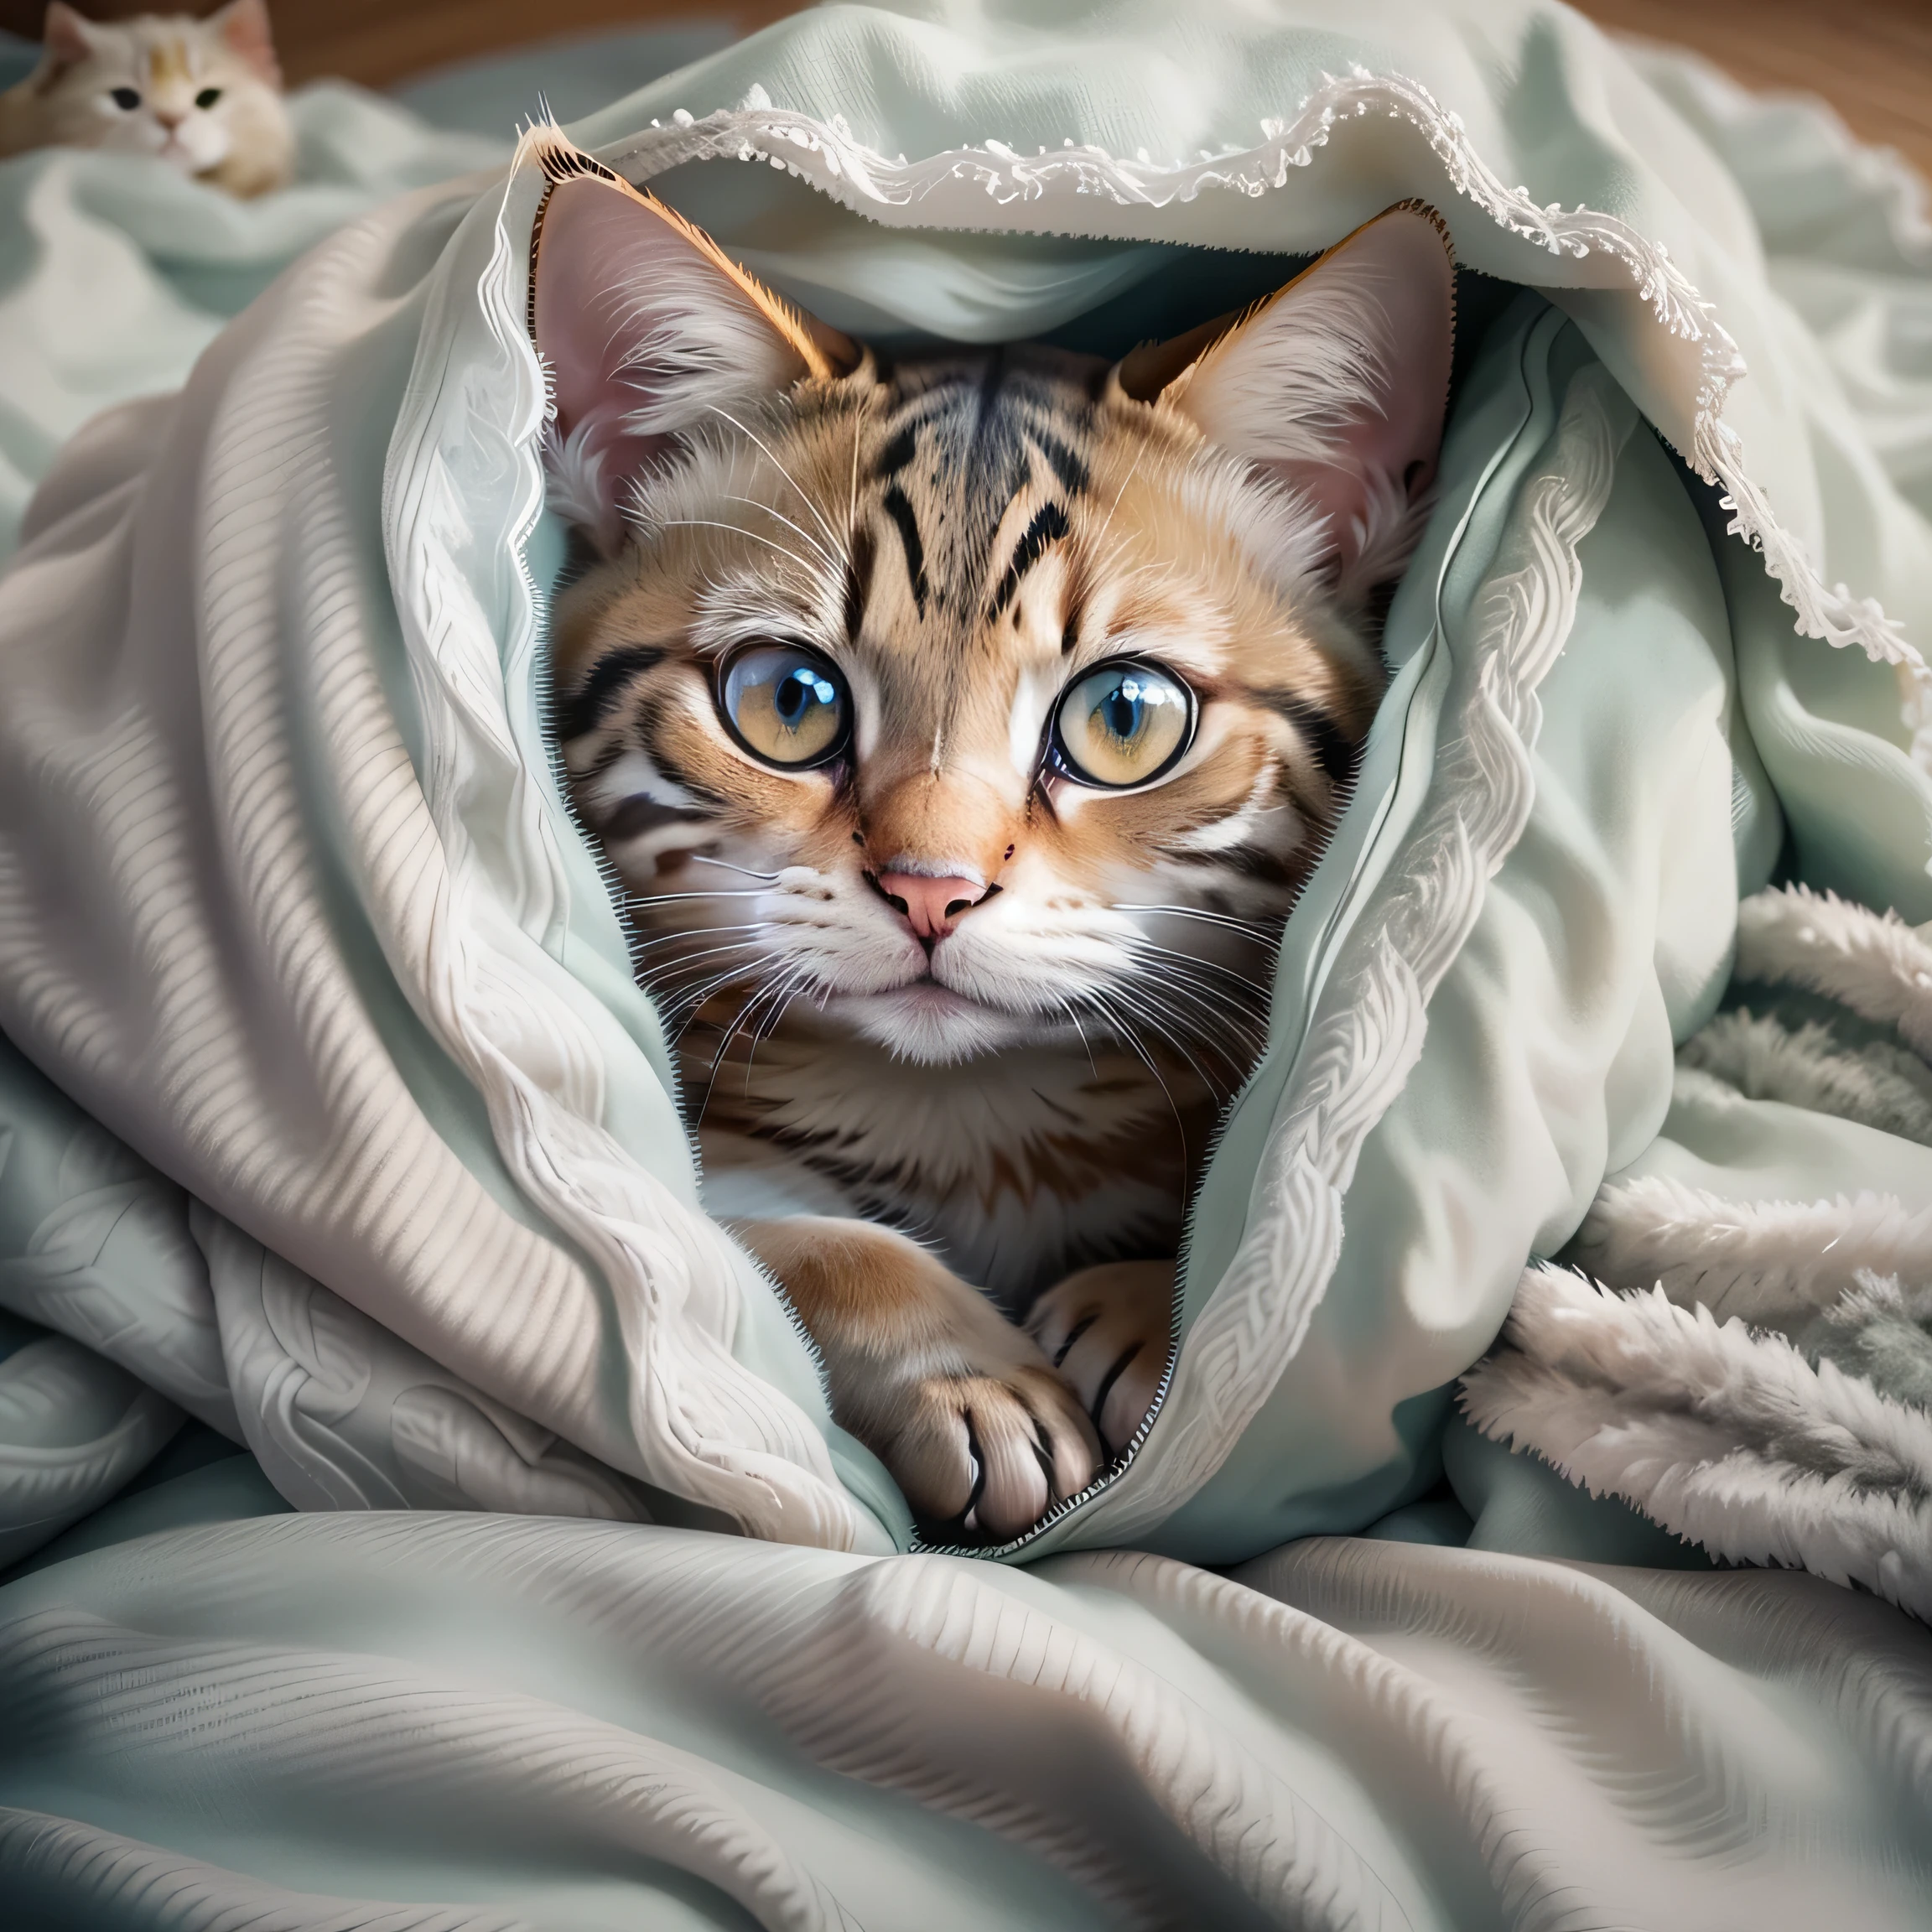 there is a cat that is 隐瞒 under a blanket, 蜷缩在被子里, 隐瞒, 凝视着你, 舒服地躺在毯子下, 猫图片, 盖上毯子, Cute 猫图片, 惊恐的表情, 生病的猫躺在卧室里, 看着镜头, 有着可爱的眼睛, 成立, 锐眼, 可爱的猫